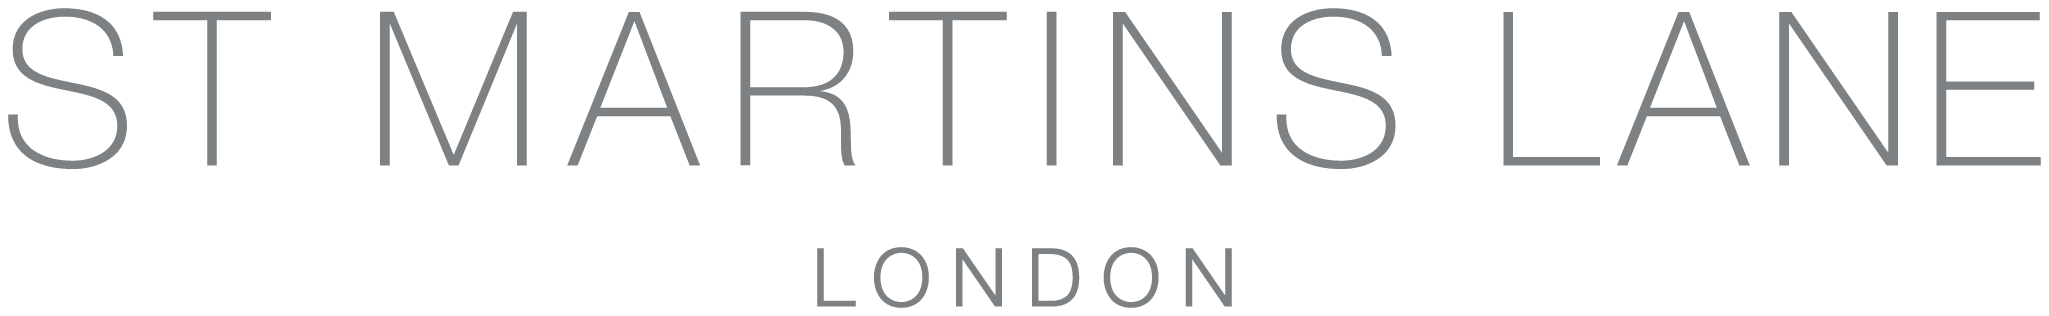 St Martins Lane London Logo